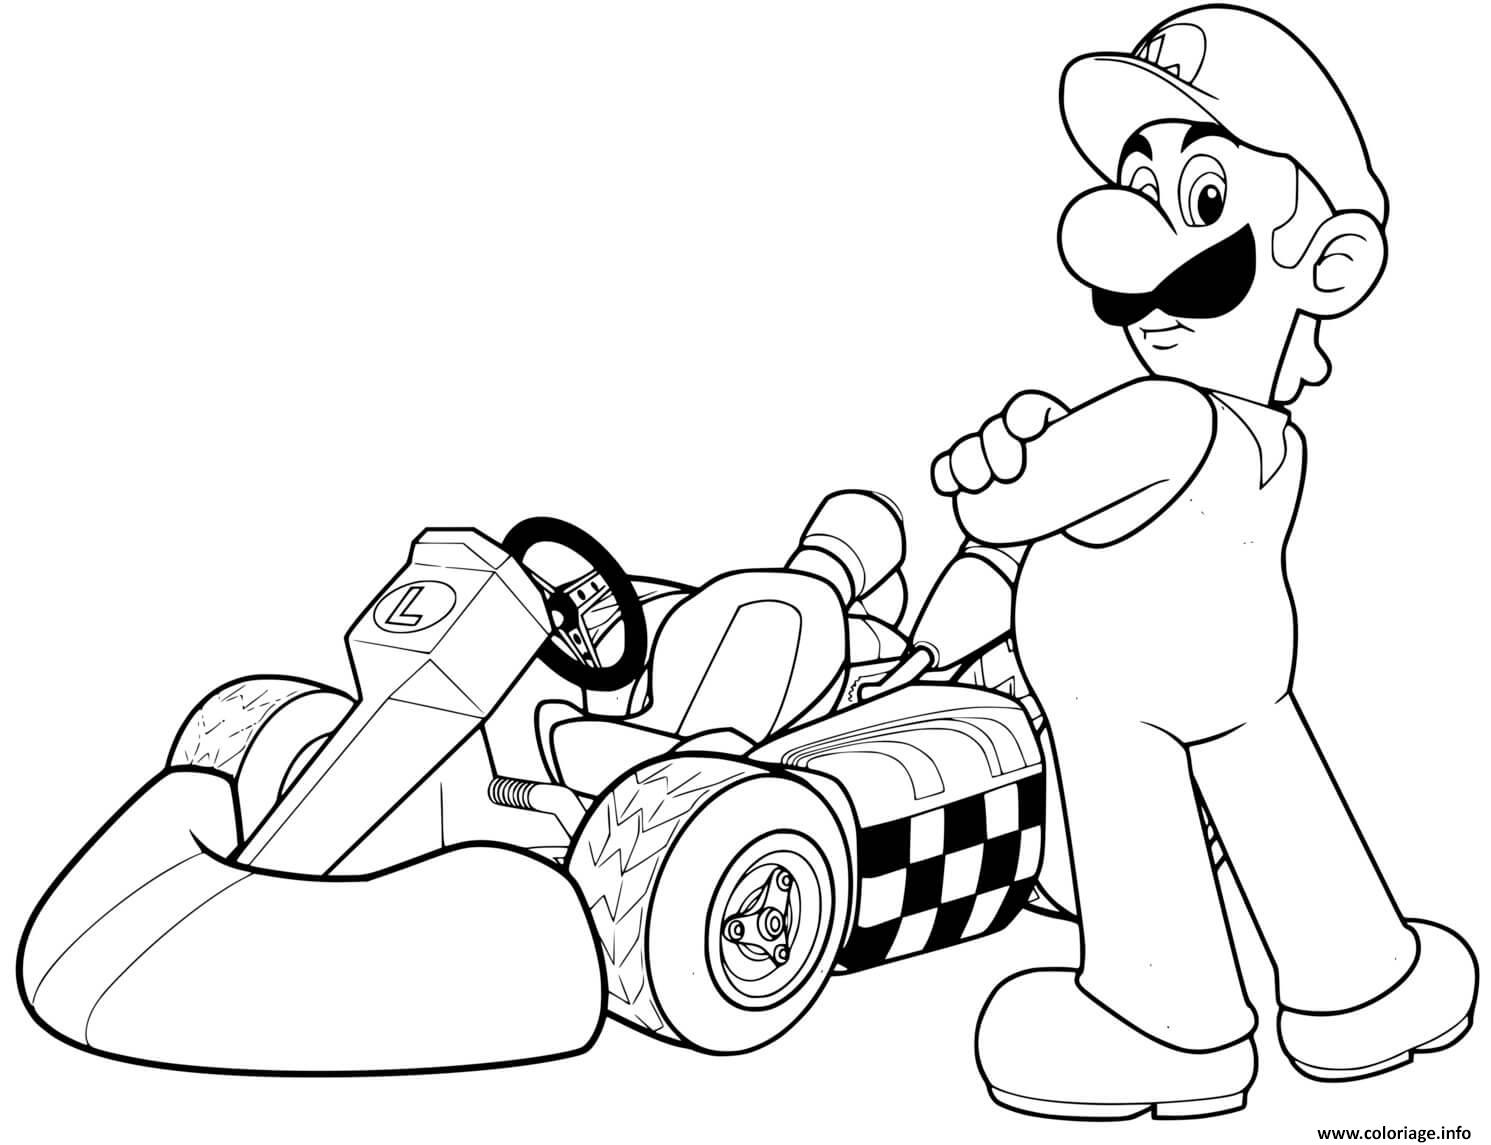 Coloriage Luigi Super Mario Bros Voiture De Course F1 Dessin à Imprimer